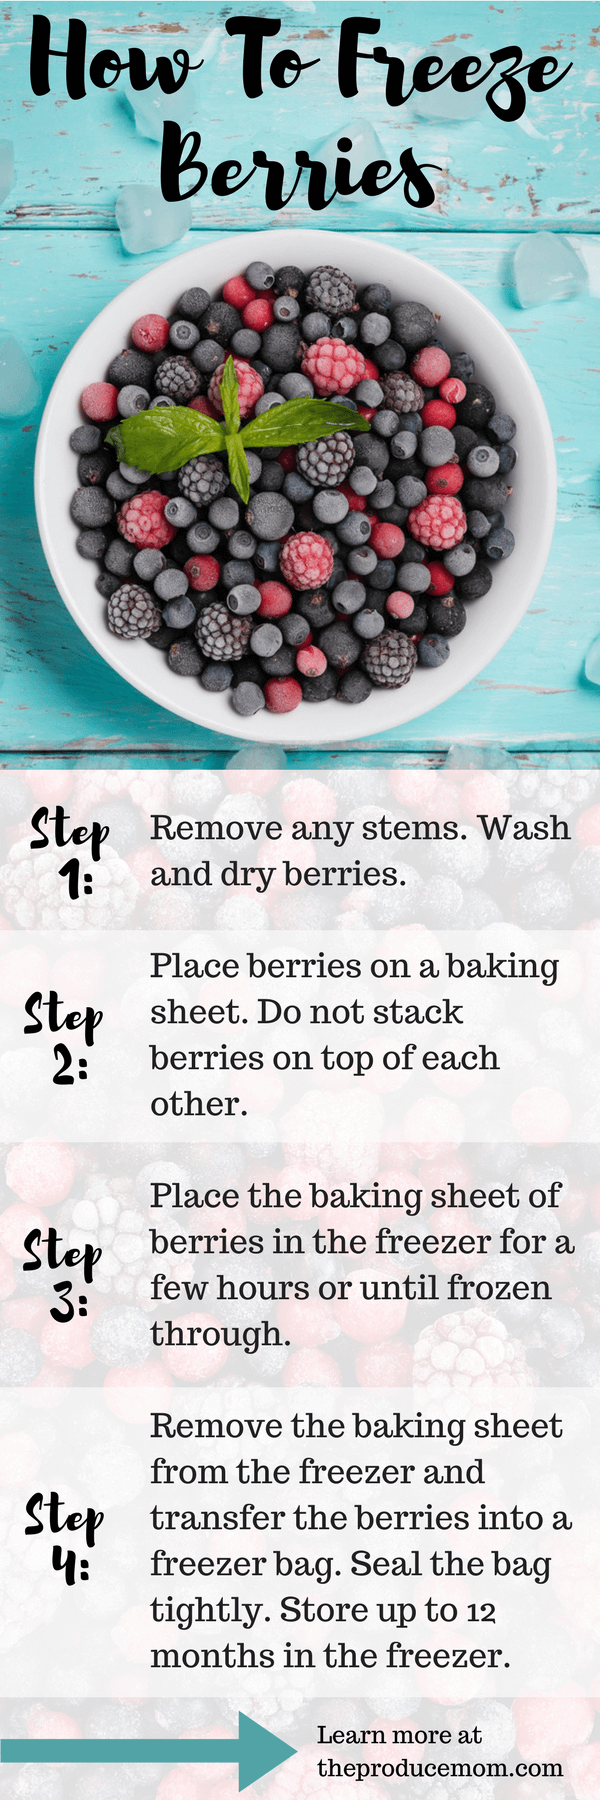 How to freeze berries | Freeze blackberries, strawberries, blueberries, raspberries! 